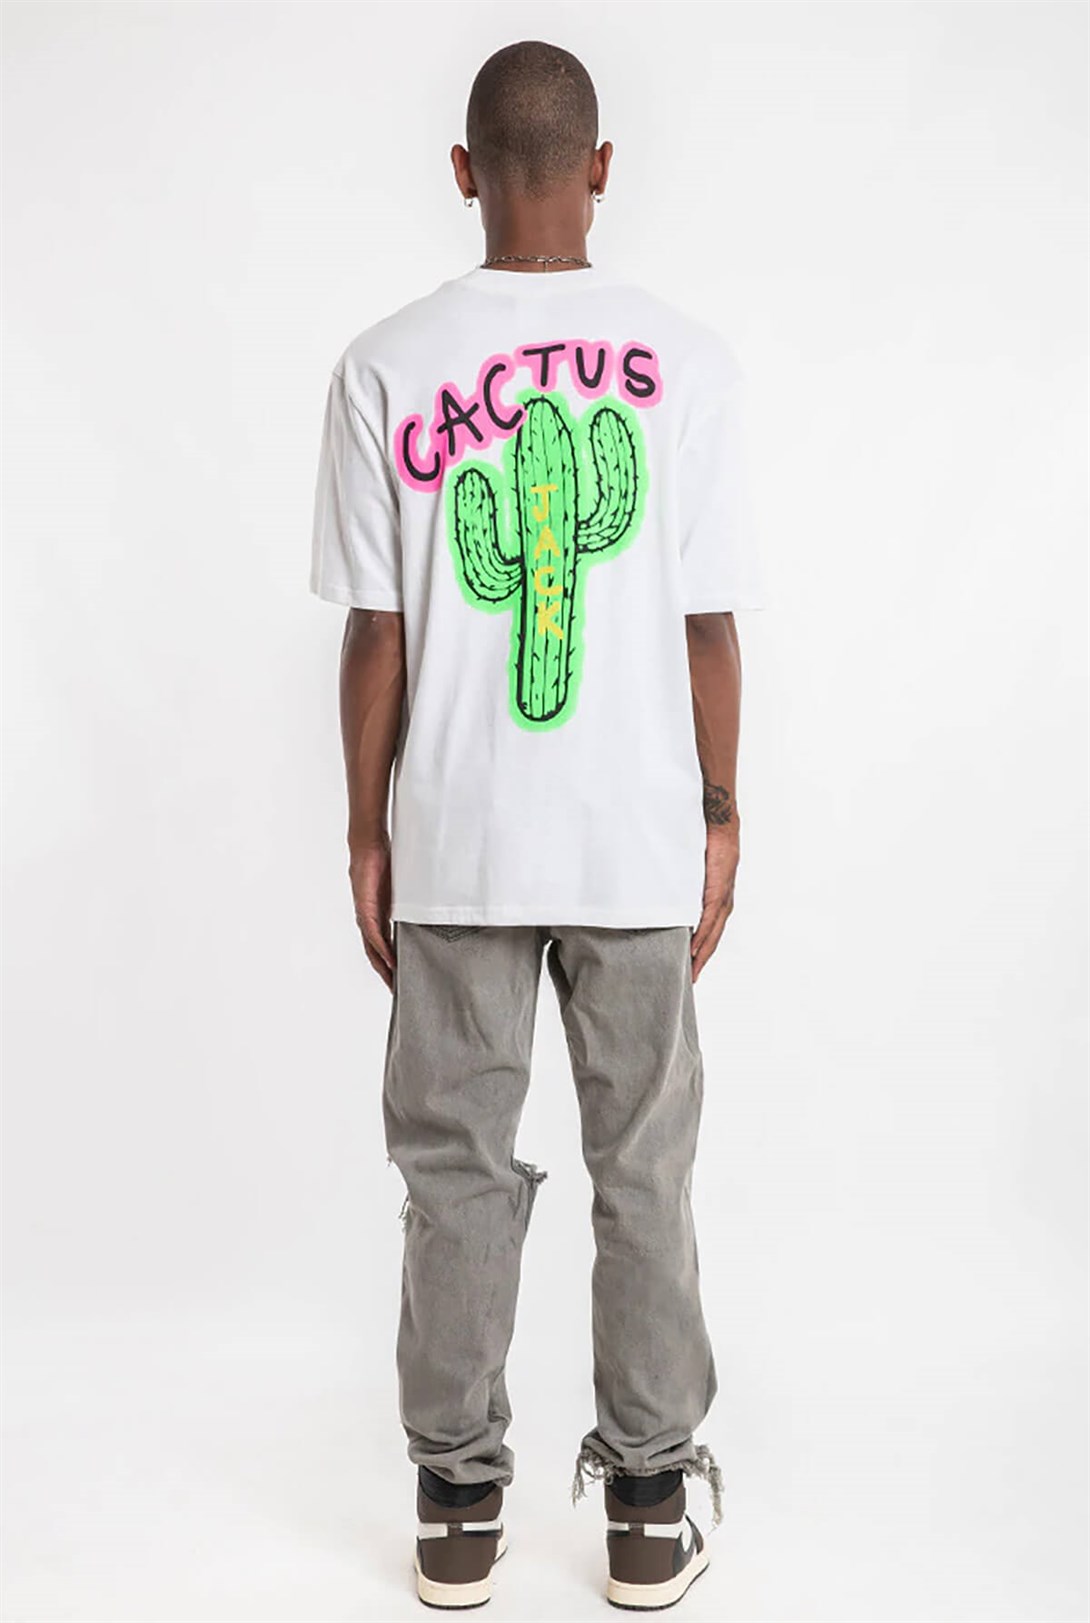 Trendiz Cactus Oversize T-shirt Beyaz